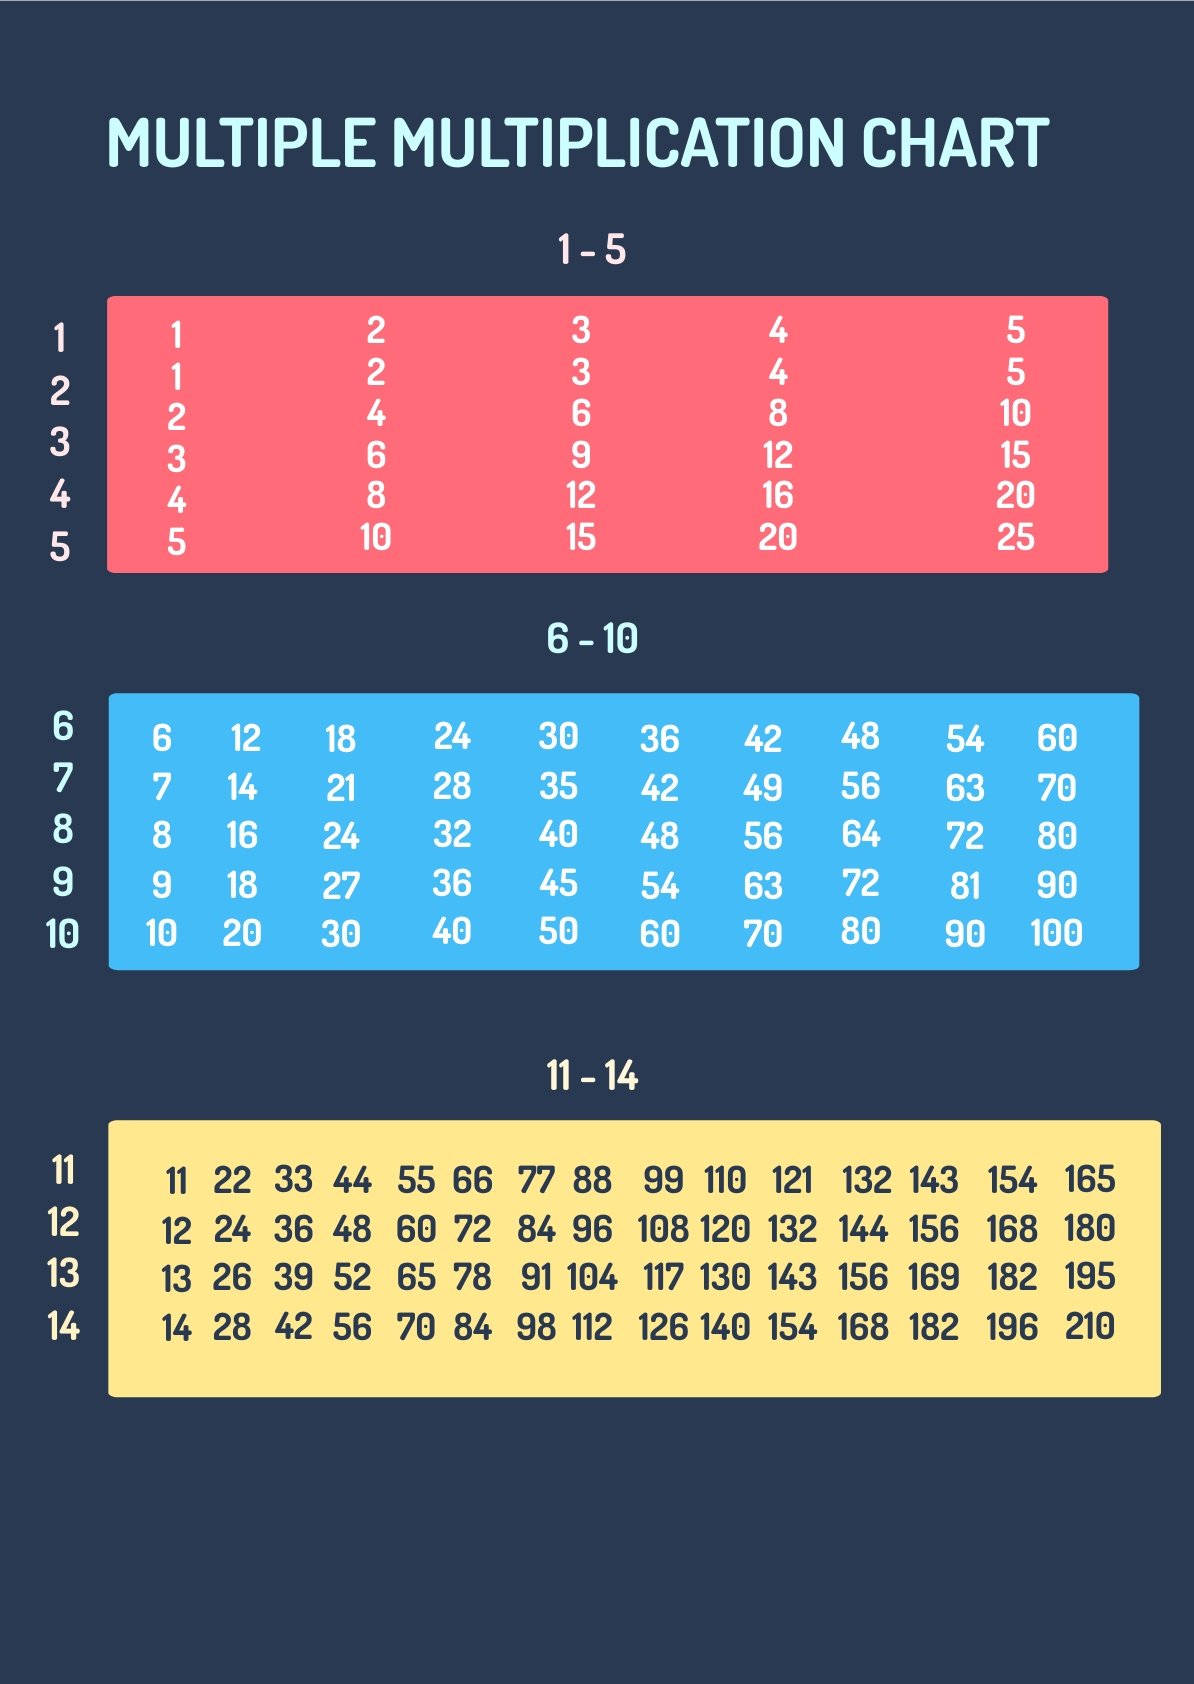 Multiple Multiplication Chart in PDF, Illustrator